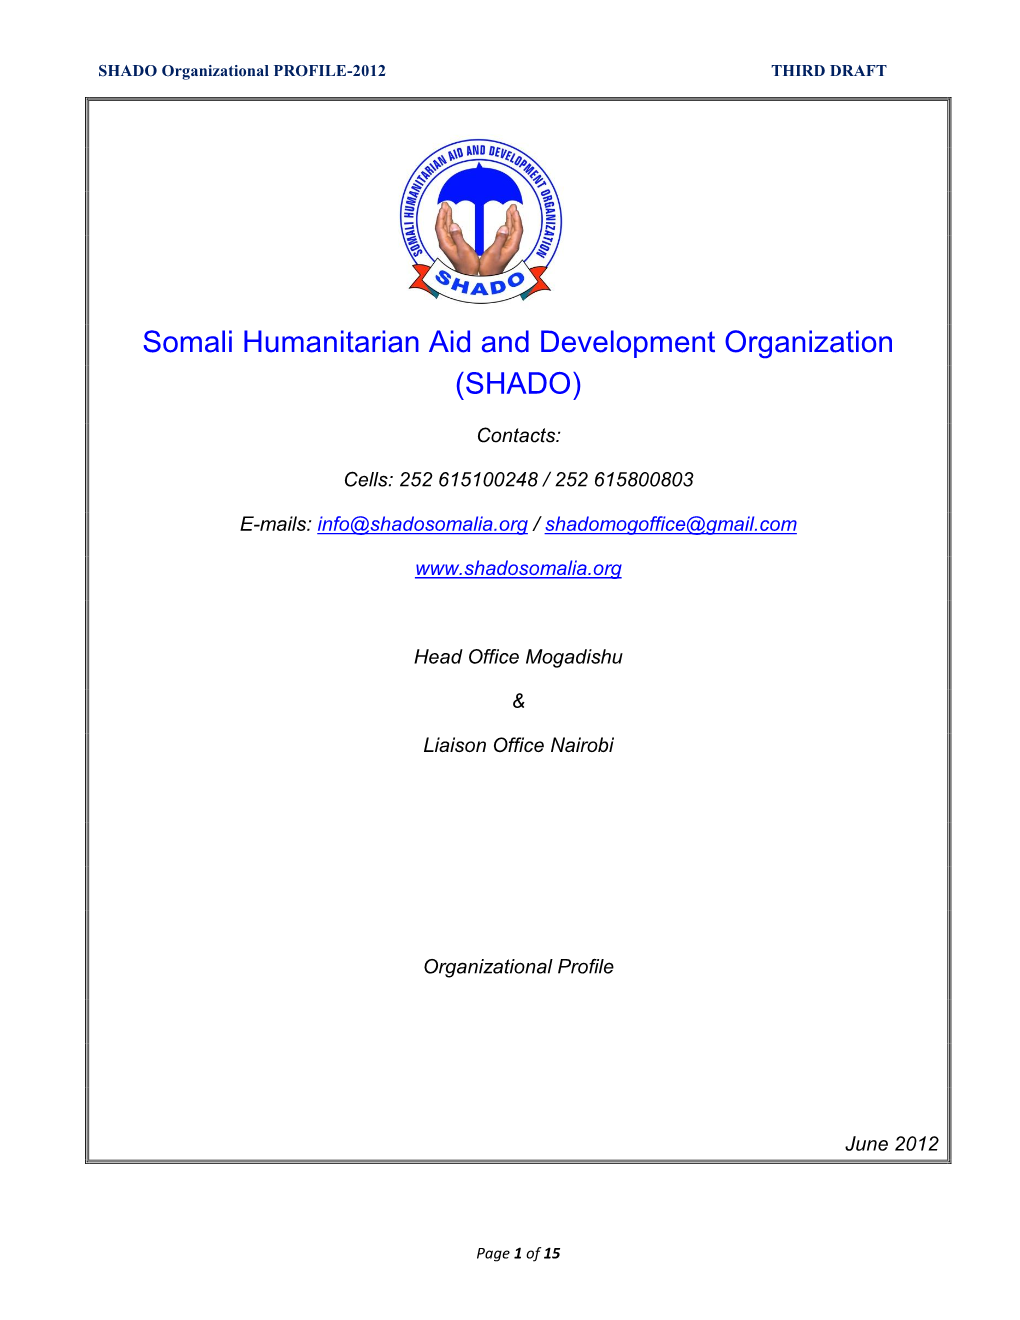 Somali Humanitarian Aid and Development Organization (SHADO)